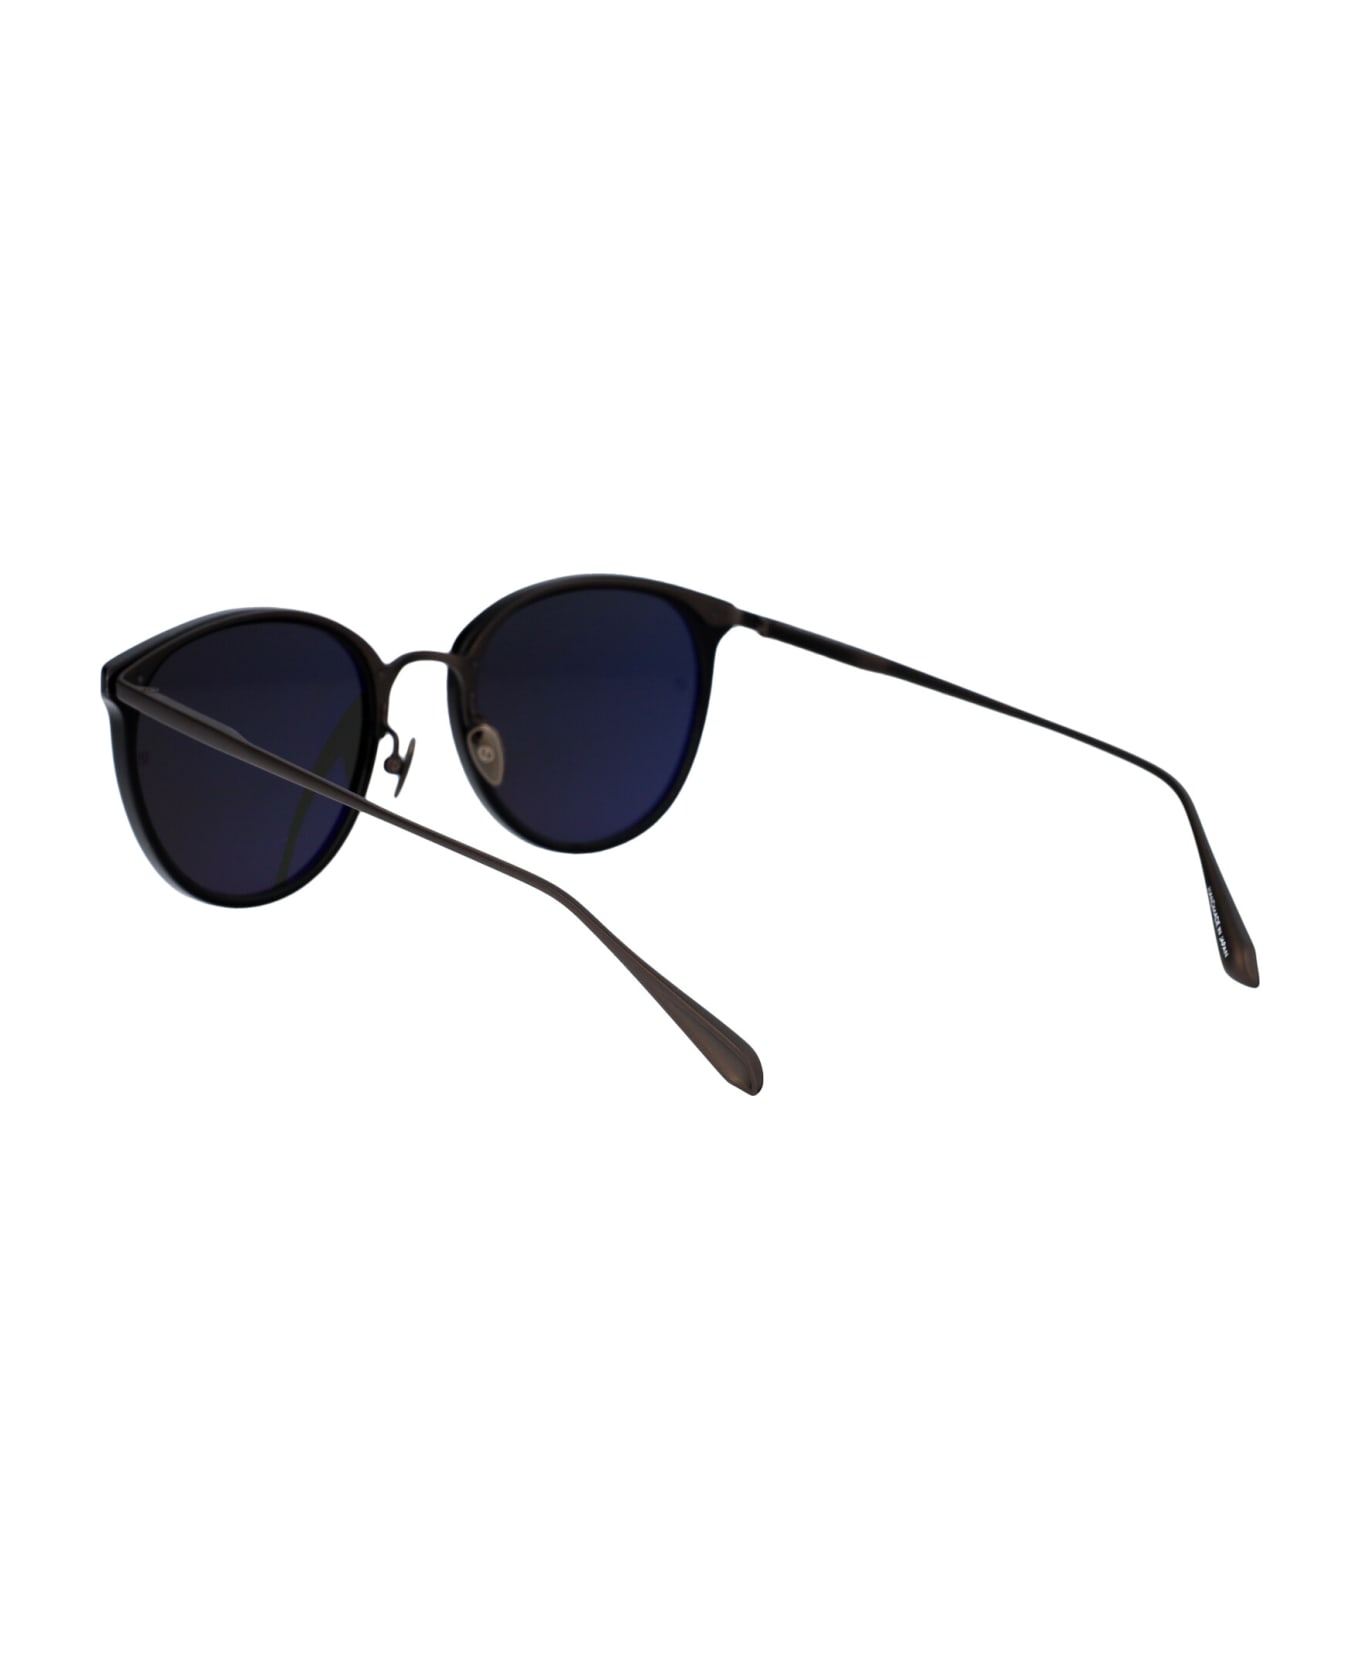 Linda Farrow Calthorpe Sunglasses - BLACK/MATTNICKEL/SOLIDGREY サングラス